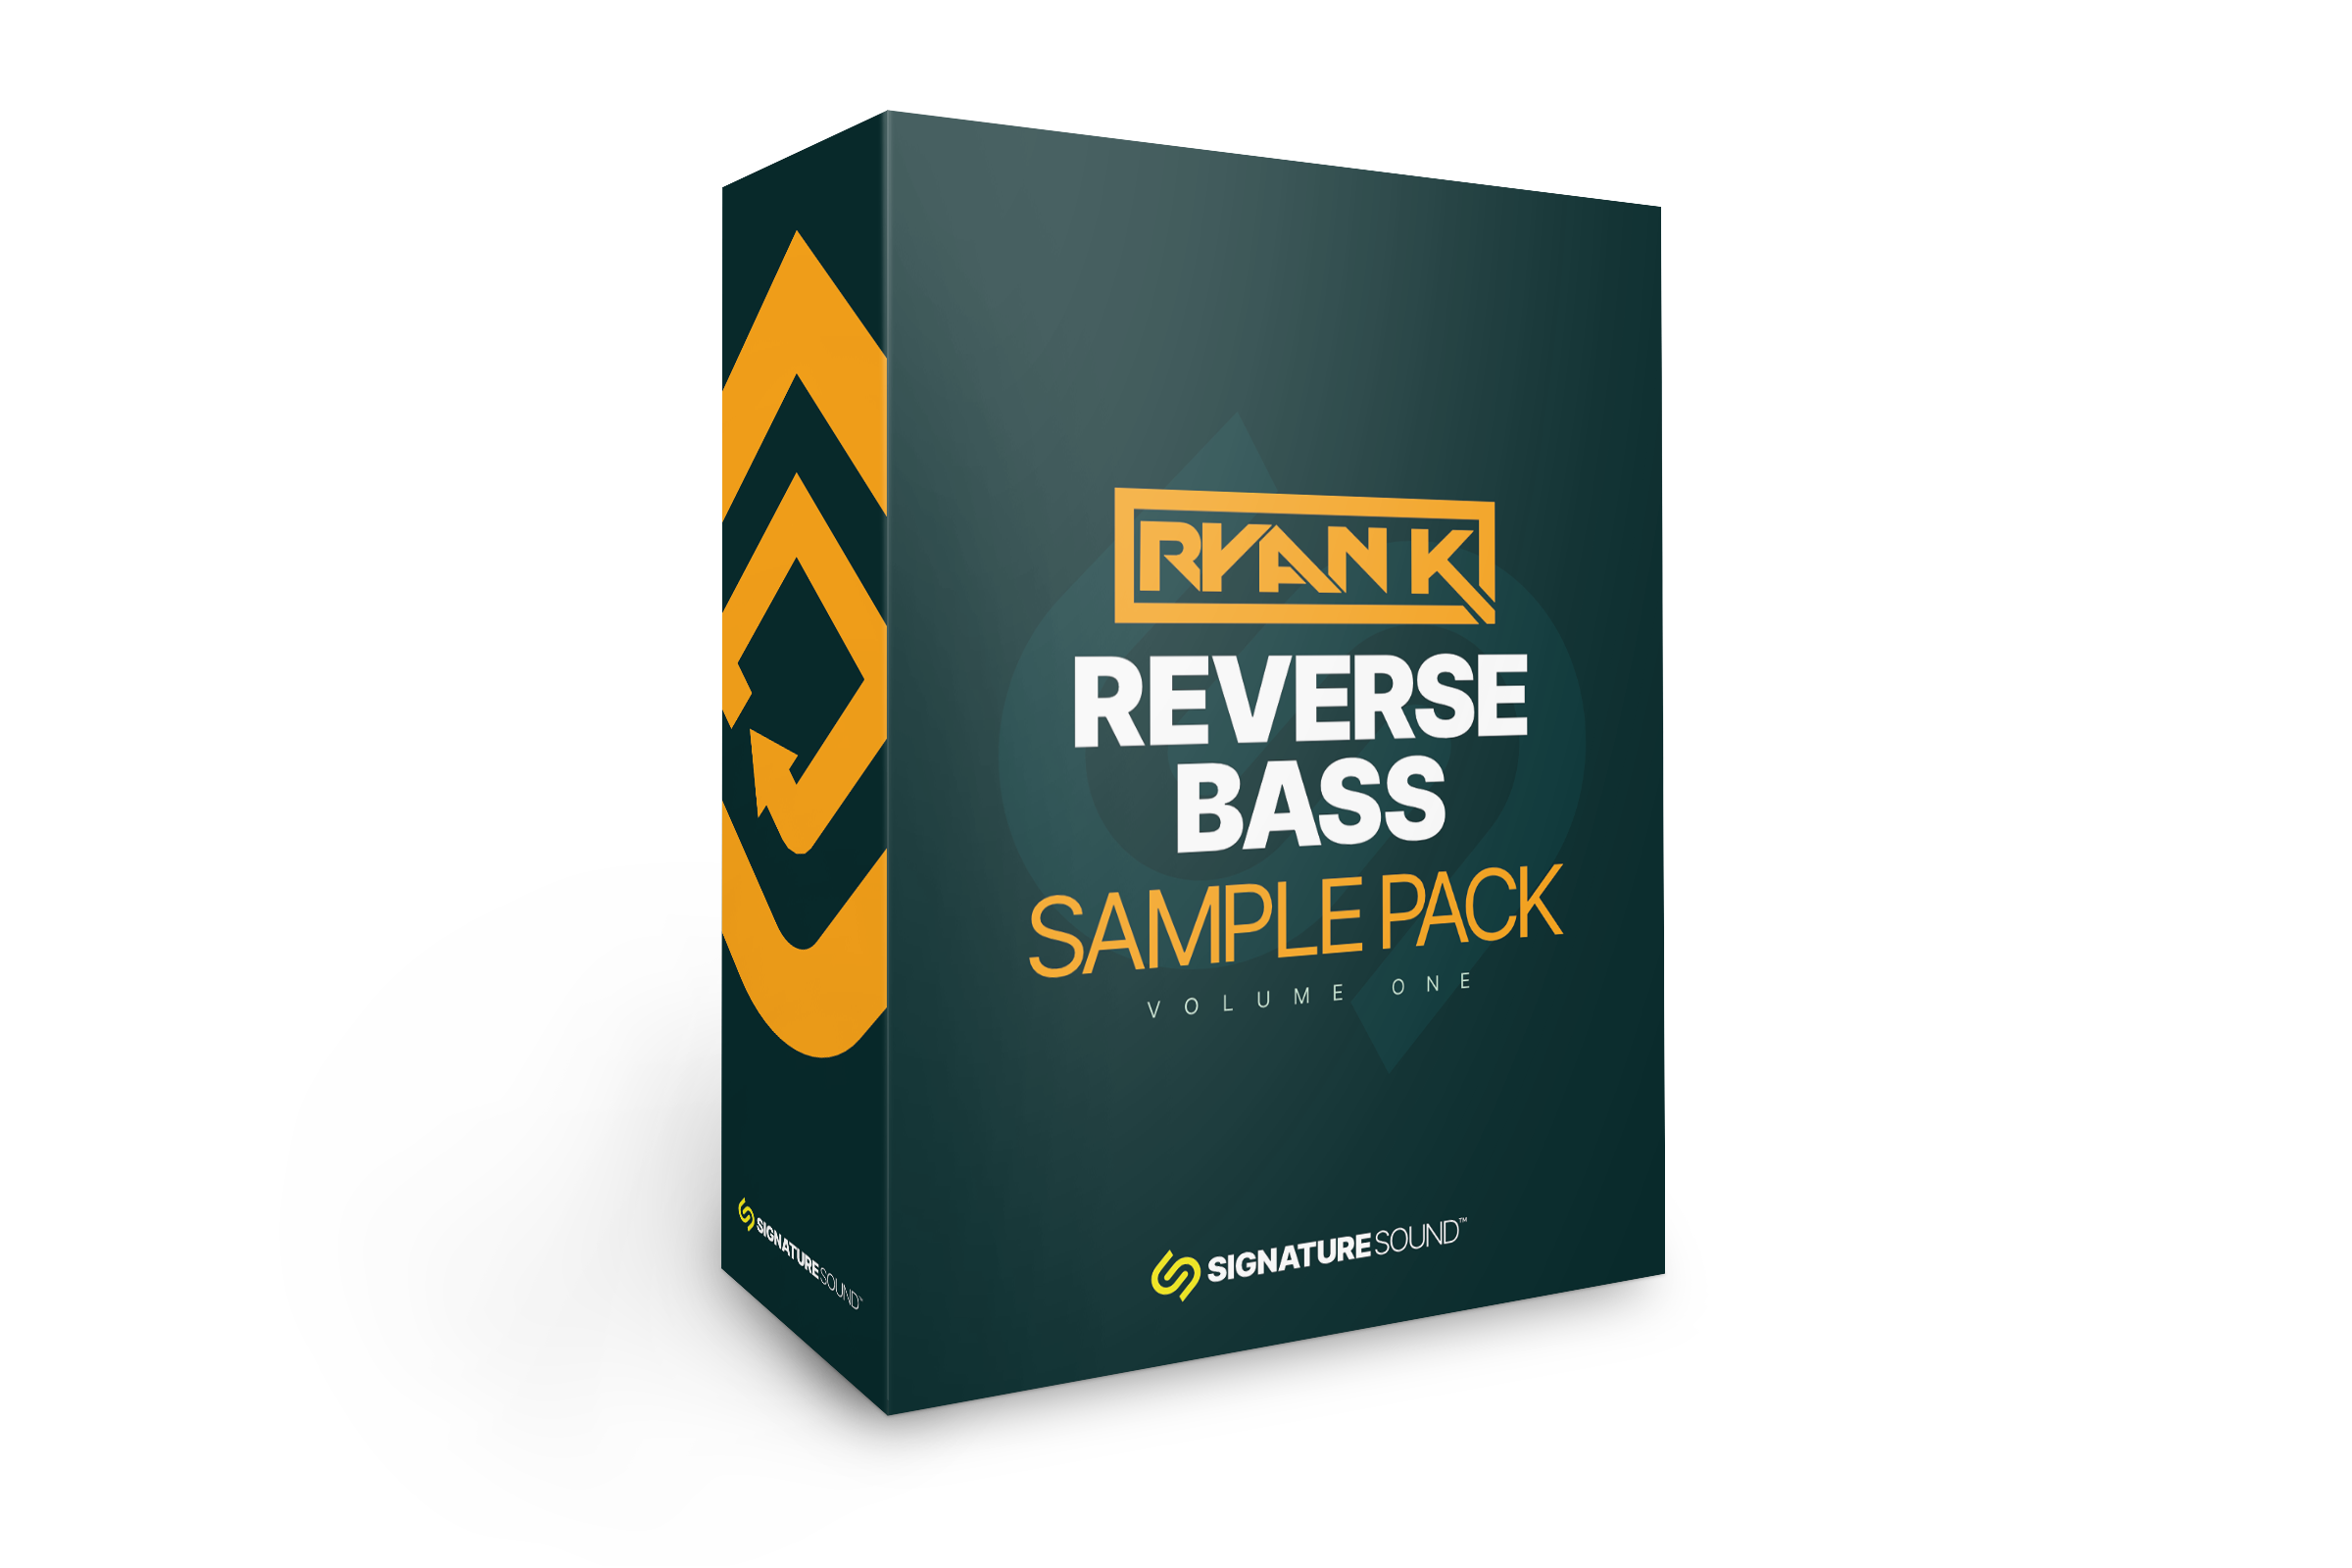 Ryan K Reverse Bass [Sample Pack] Volume One